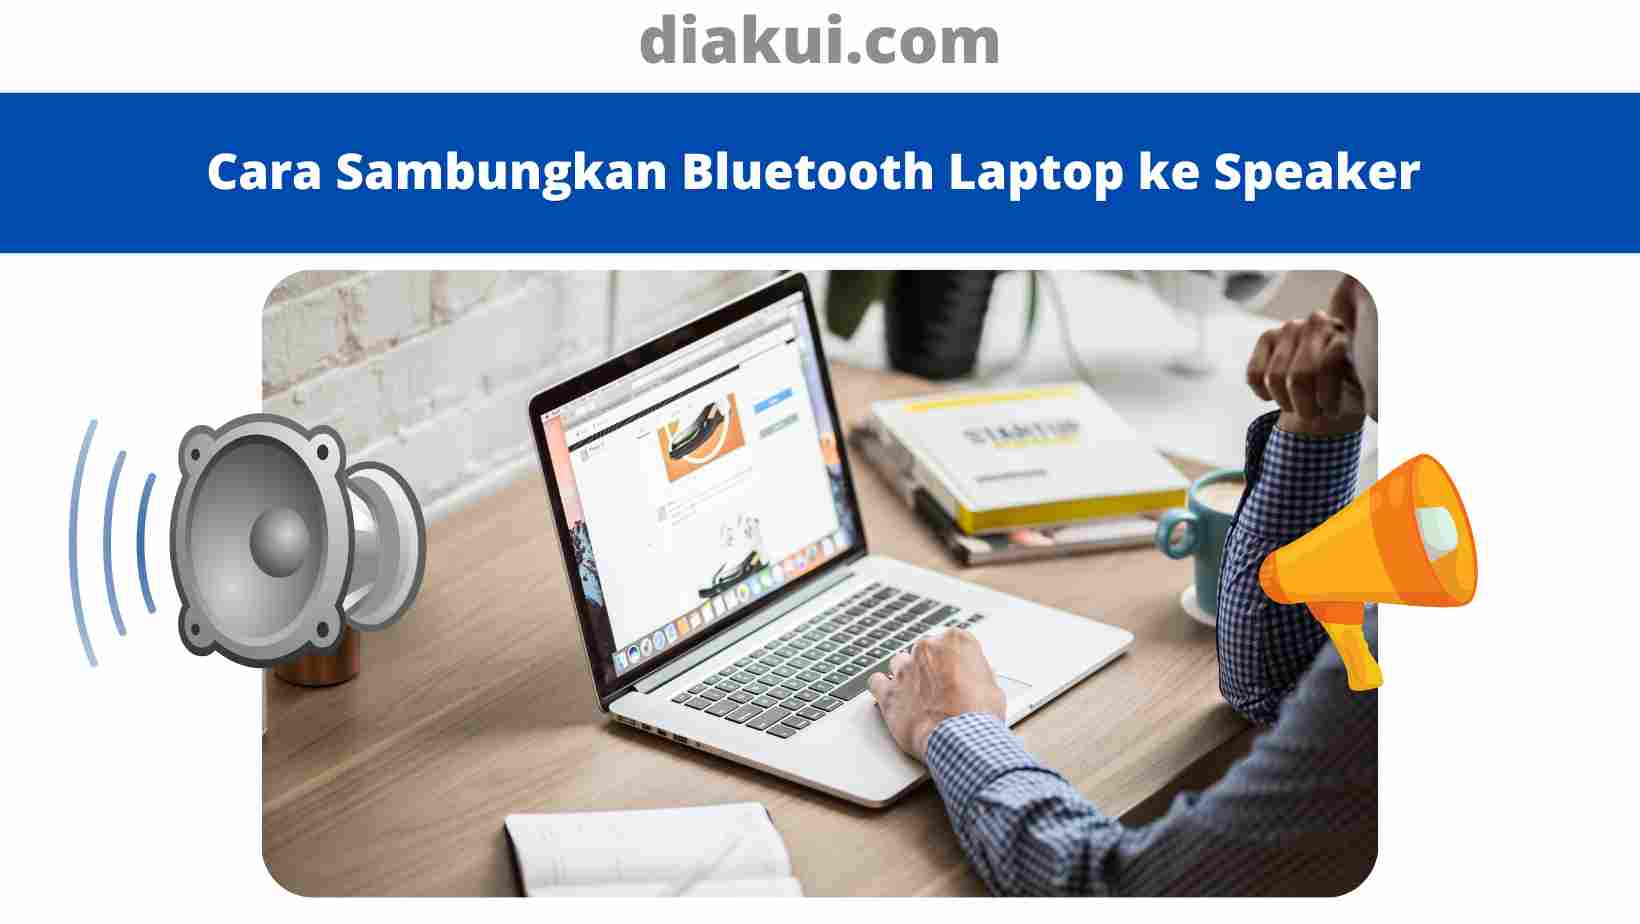 Cara Sambungkan Bluetooth Laptop ke Speaker